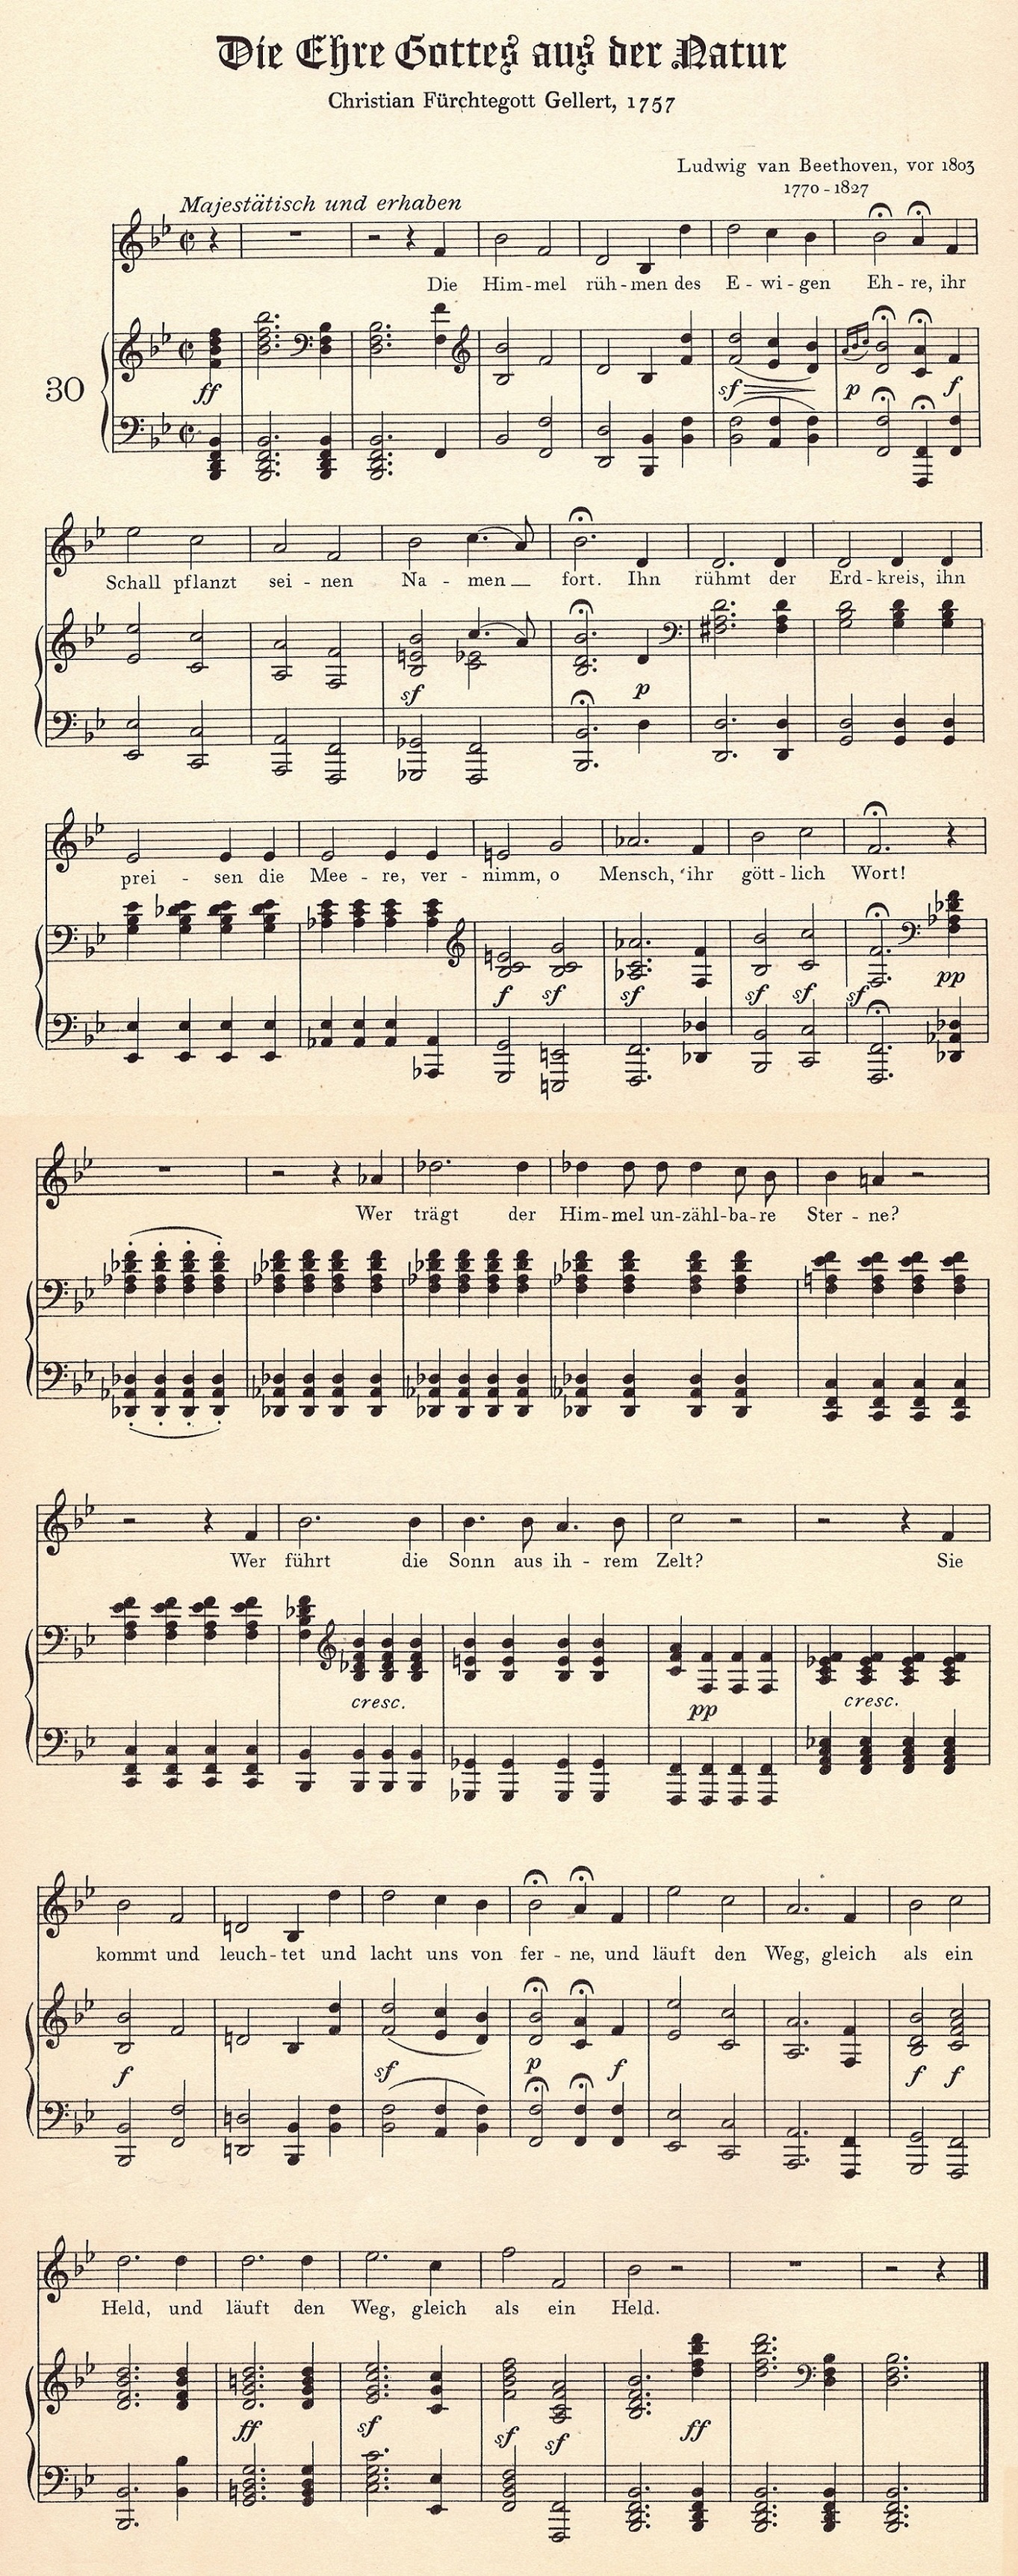 File:Beethoven Die Himmel rühmen des Ewigen Ehre (ed. Max Friedlaender).jpg  - Wikimedia Commons